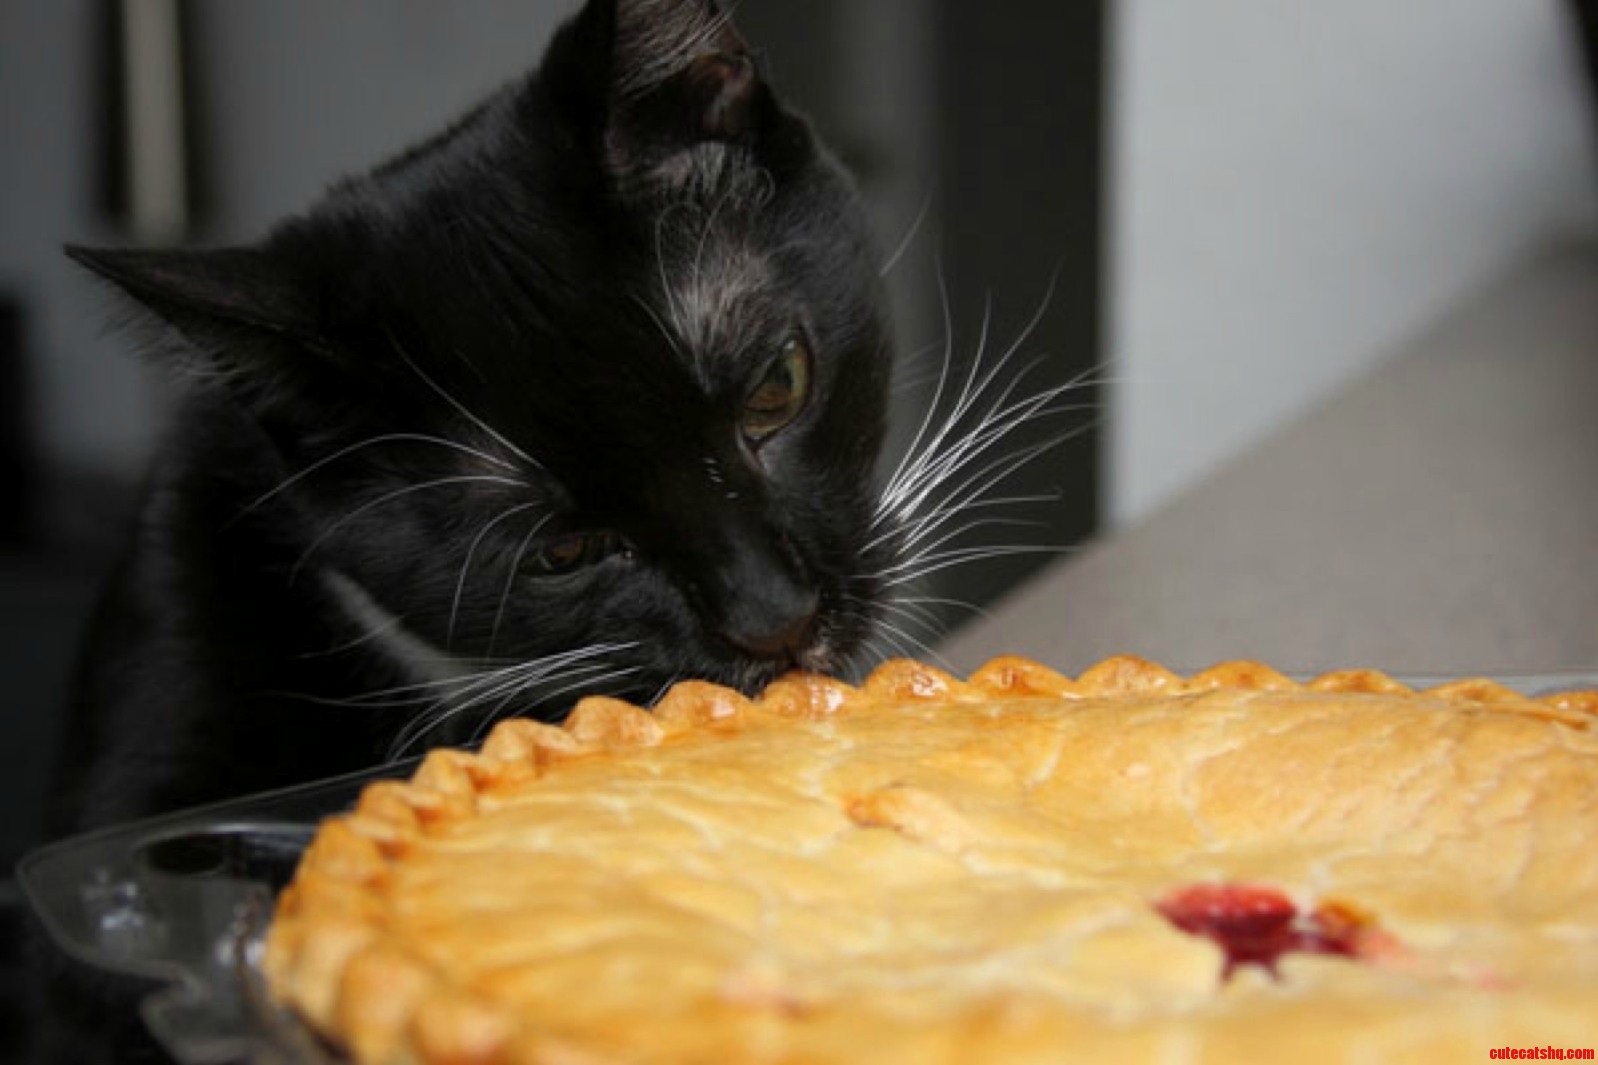 Even kitties love pie day